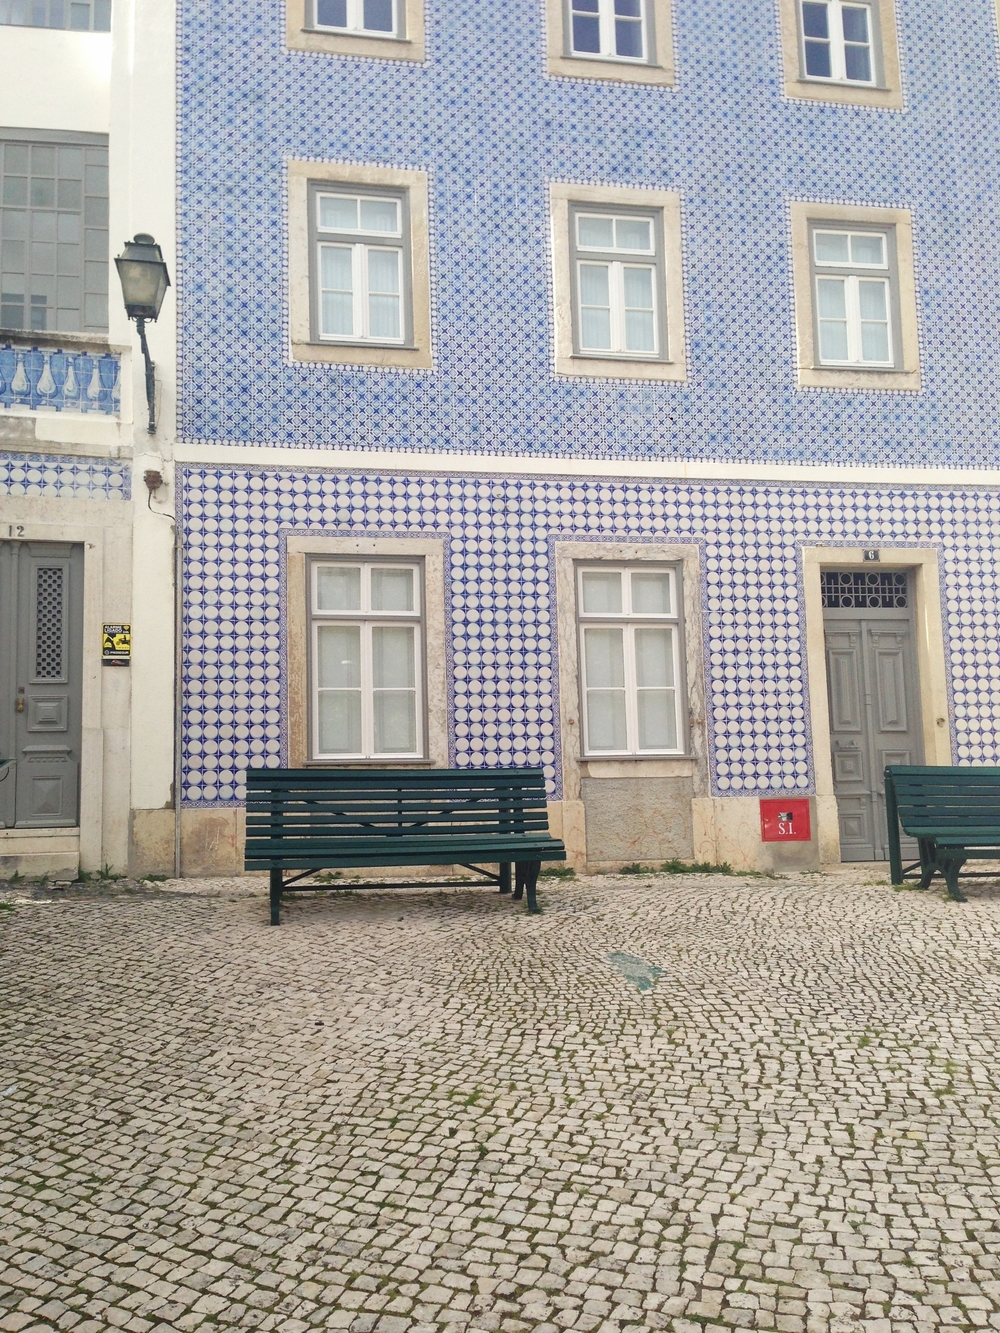  blue tiles alfama hello getaway cityguide Lisbon